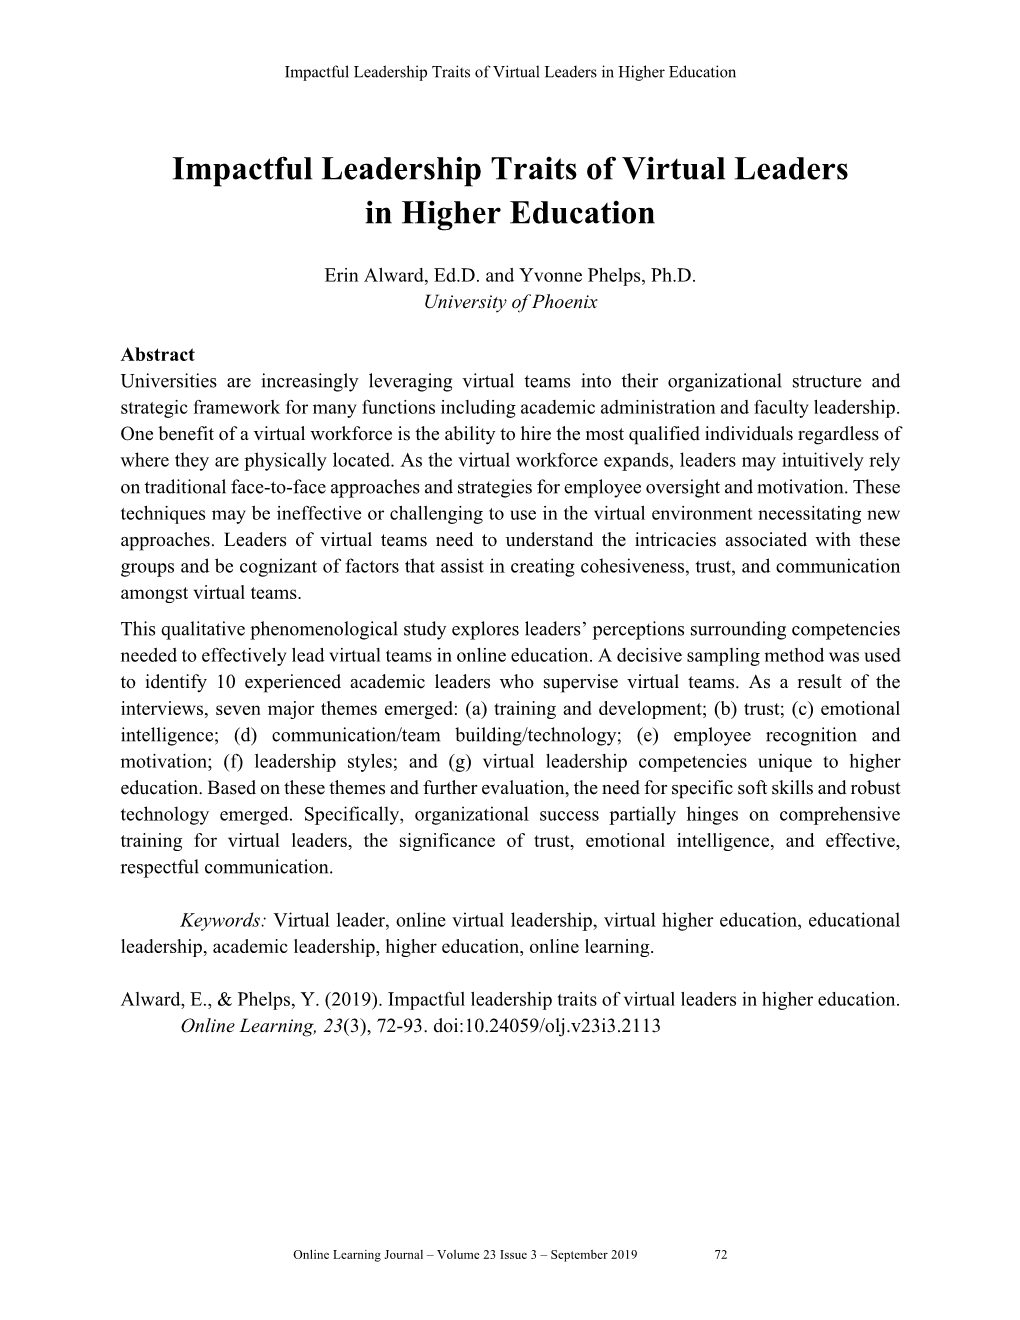 Impactful Leadership Traits of Virtual Leaders in Higher Education. Online Learning, 23(3), 72-93